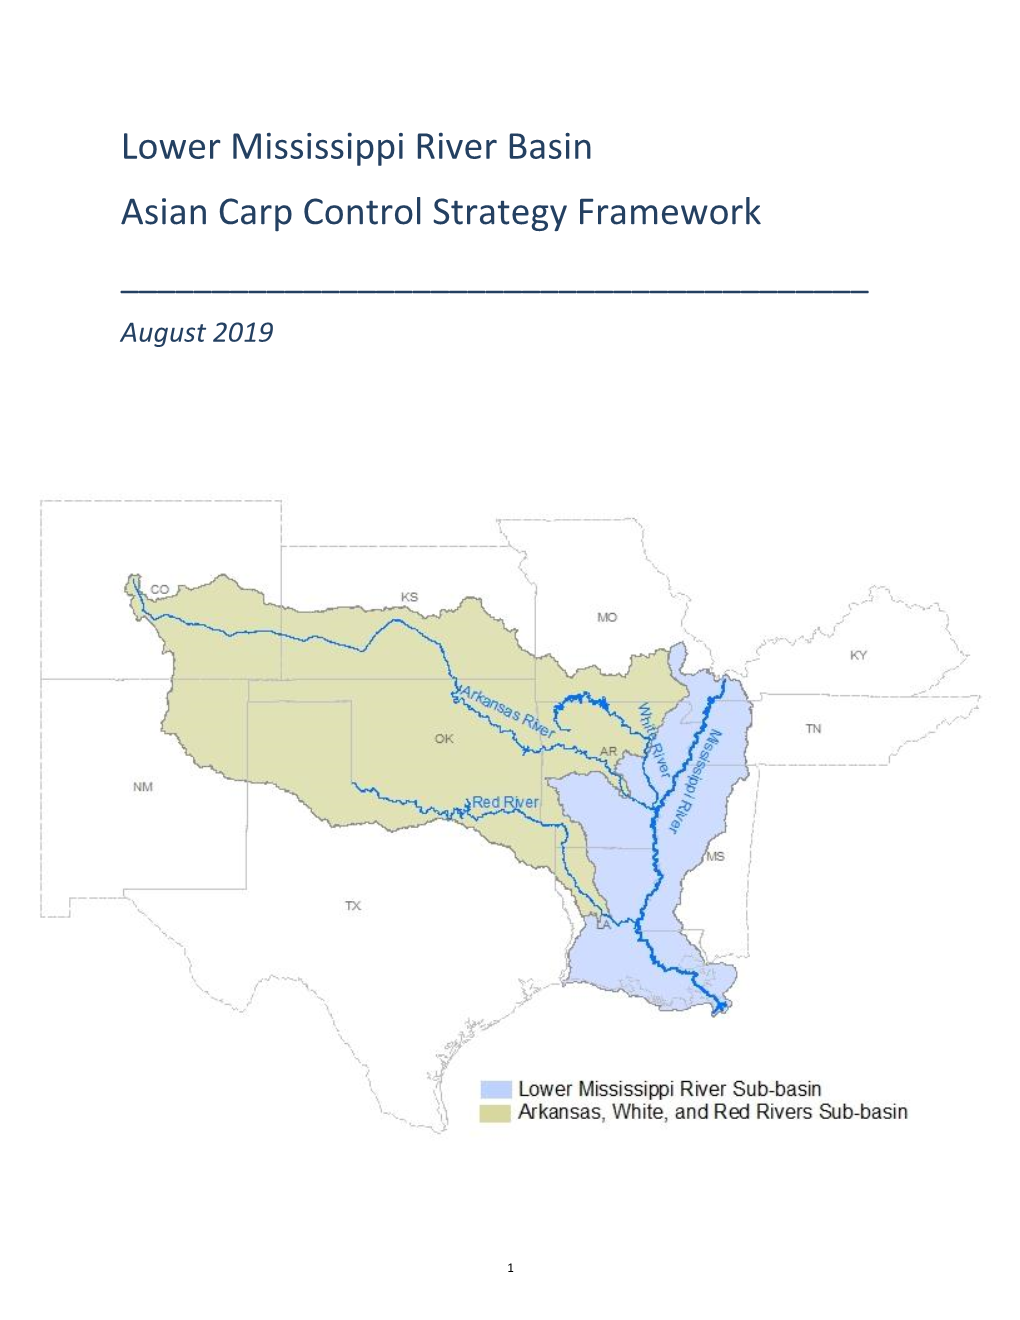 Lower Mississippi River Basin Asian Carp Control Strategy Framework ______August 2019